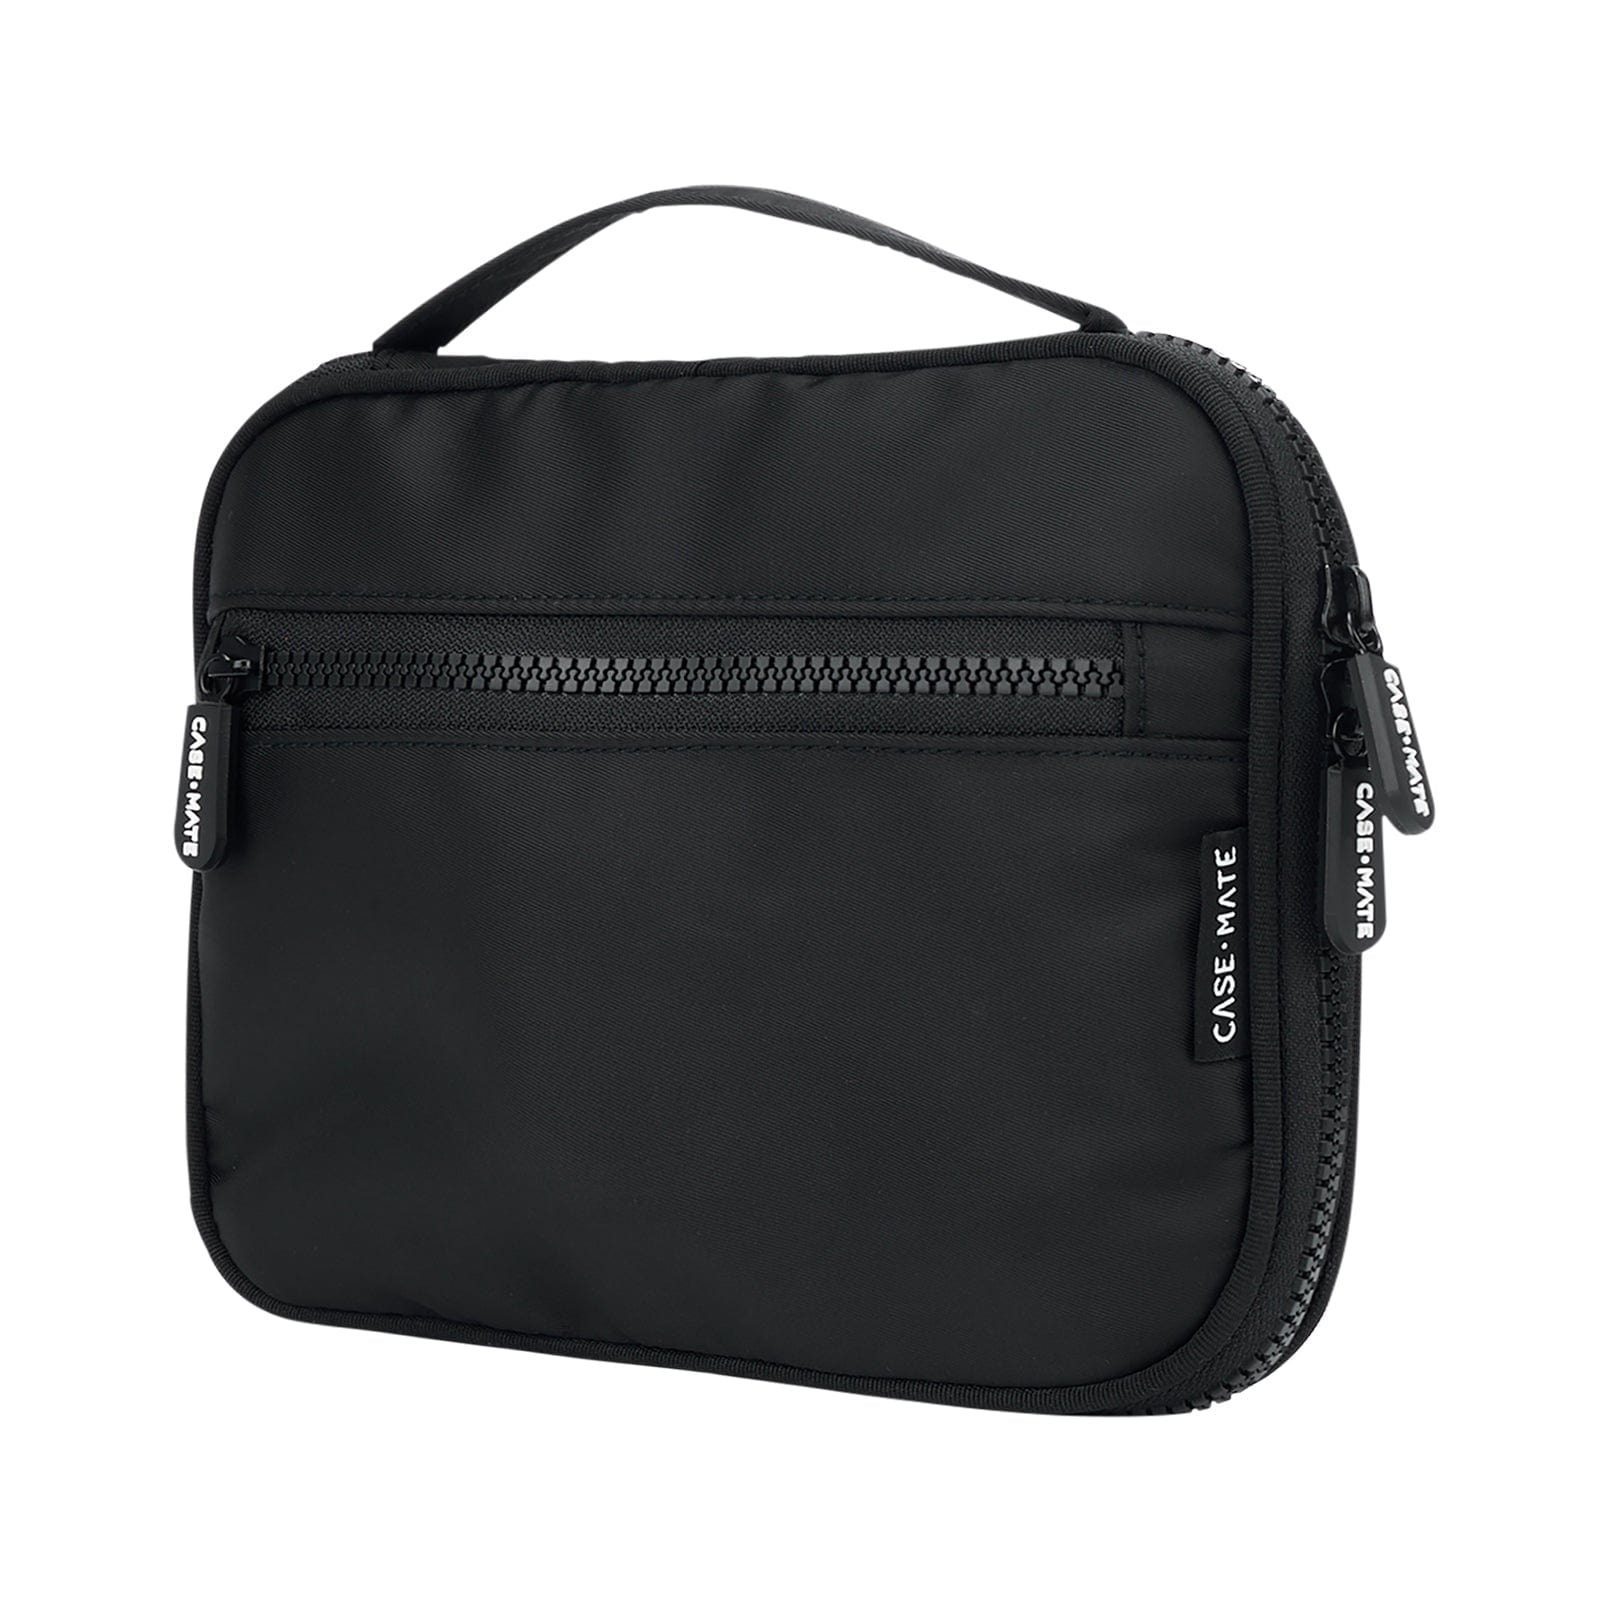  VILLCASE handbag organizer bag organizer for traveling